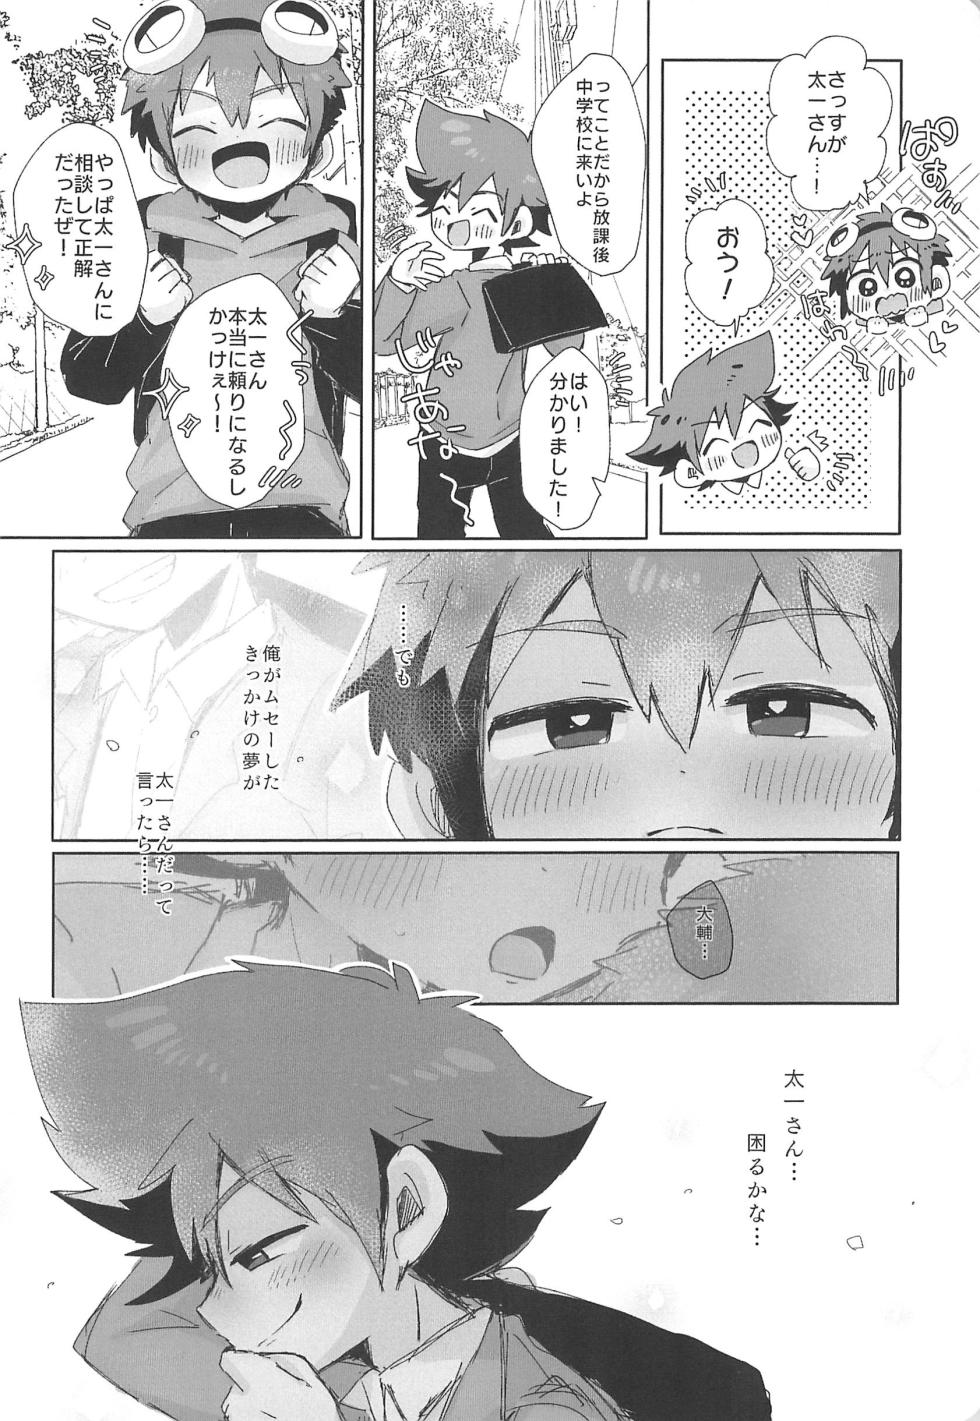 [＠szkn (Suzuki Sukyana)] Re:Re: (Digimon Adventure) - Page 12